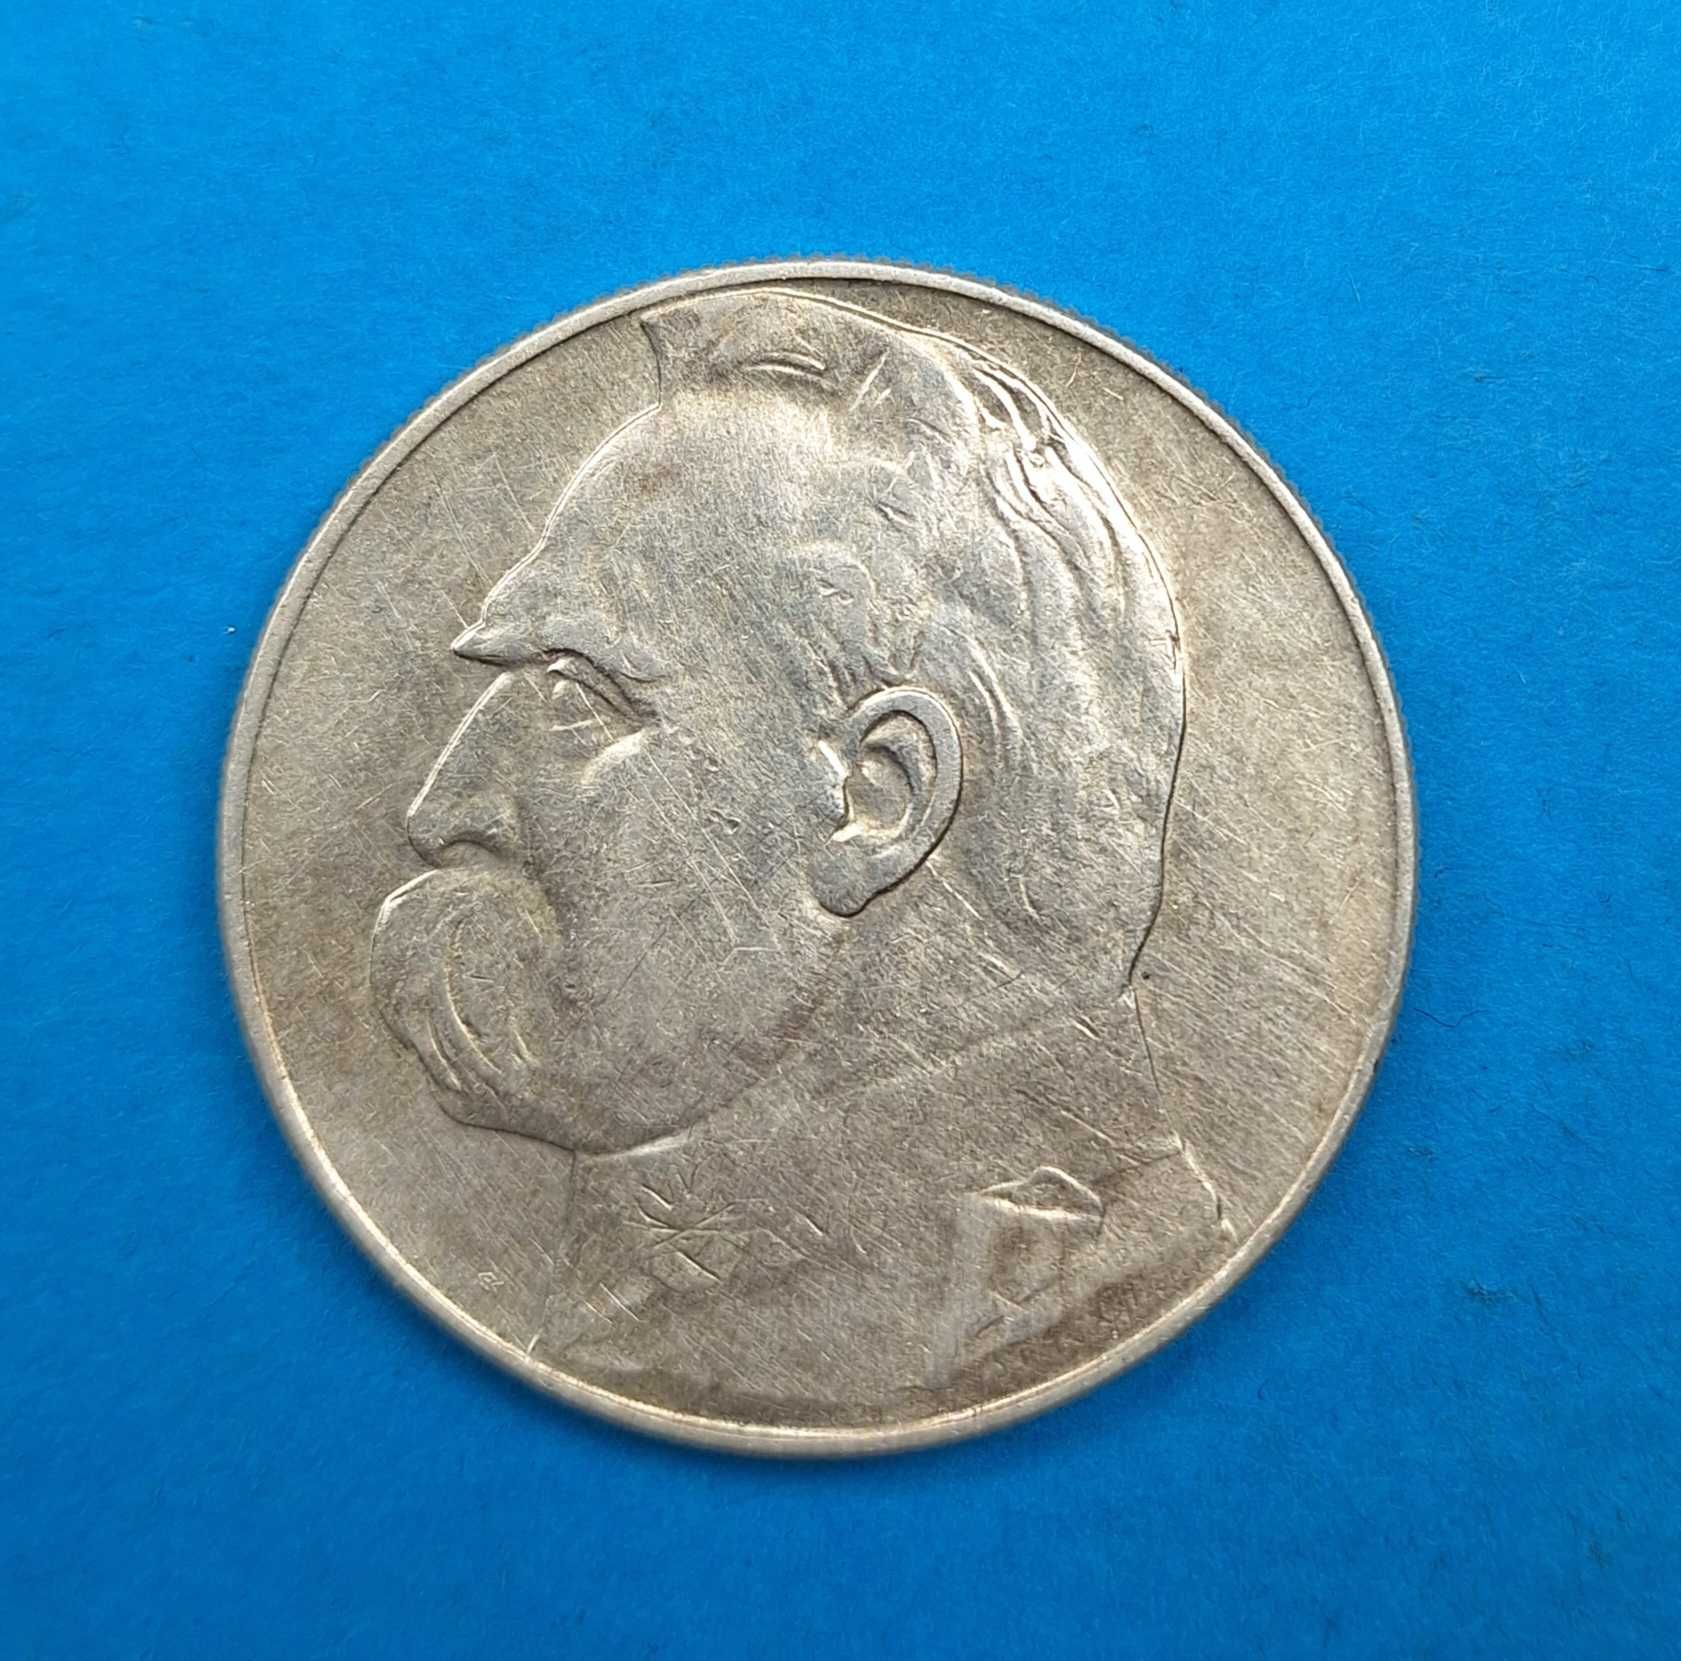 Polska 10zł rok 1937, Józef Piłsudski, dobry stan, srebro 0,750